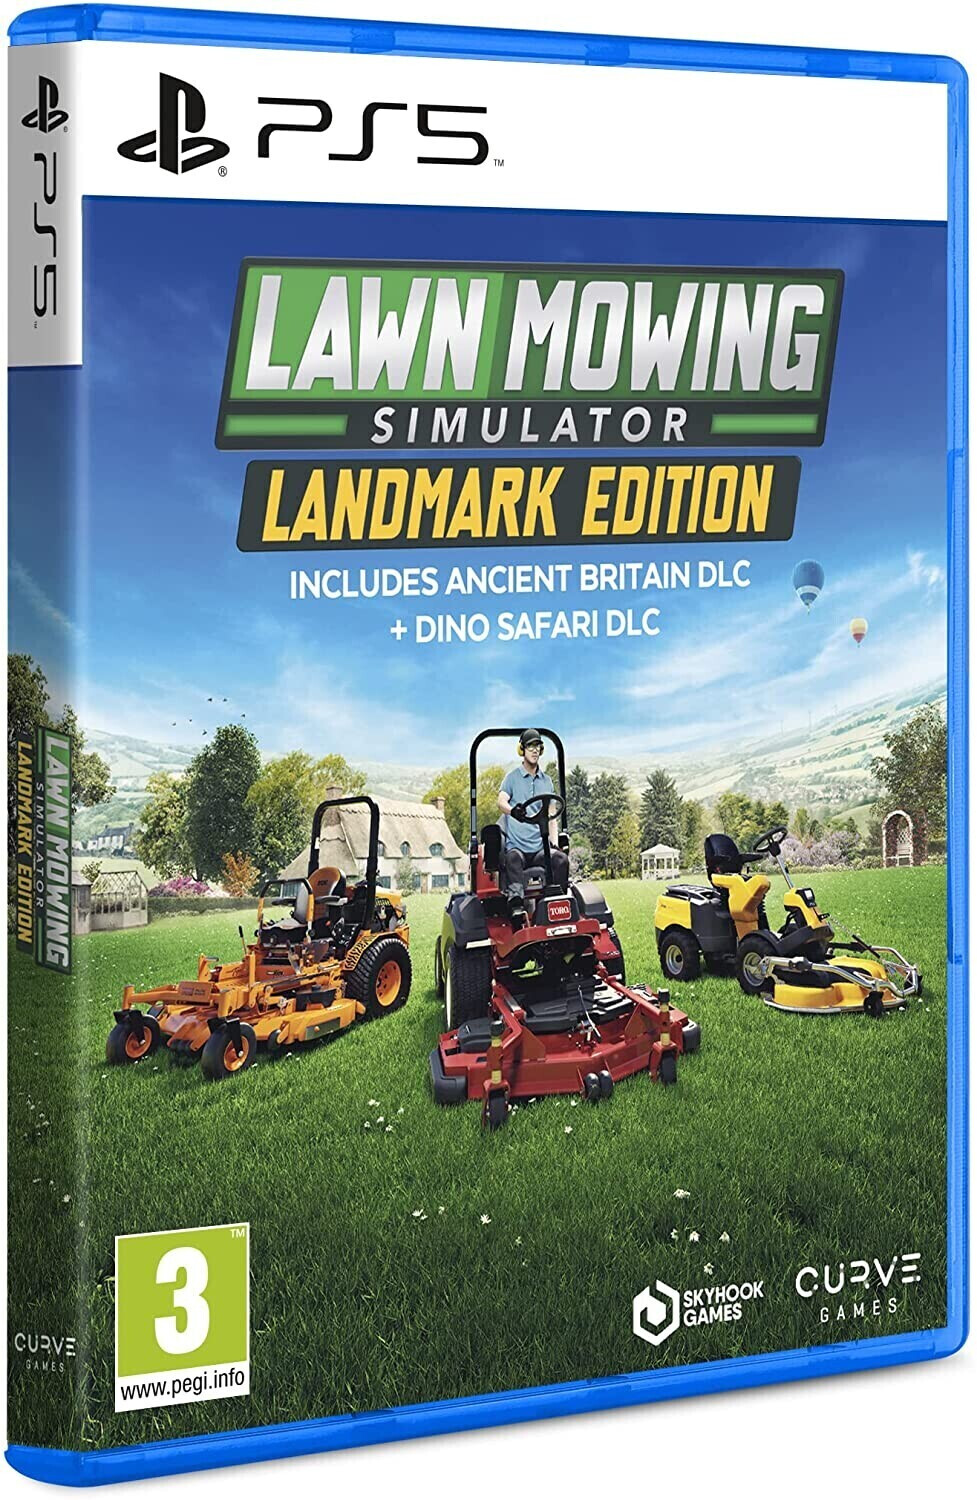 PS5 Lawn Mowing Simulator Landmark Edition